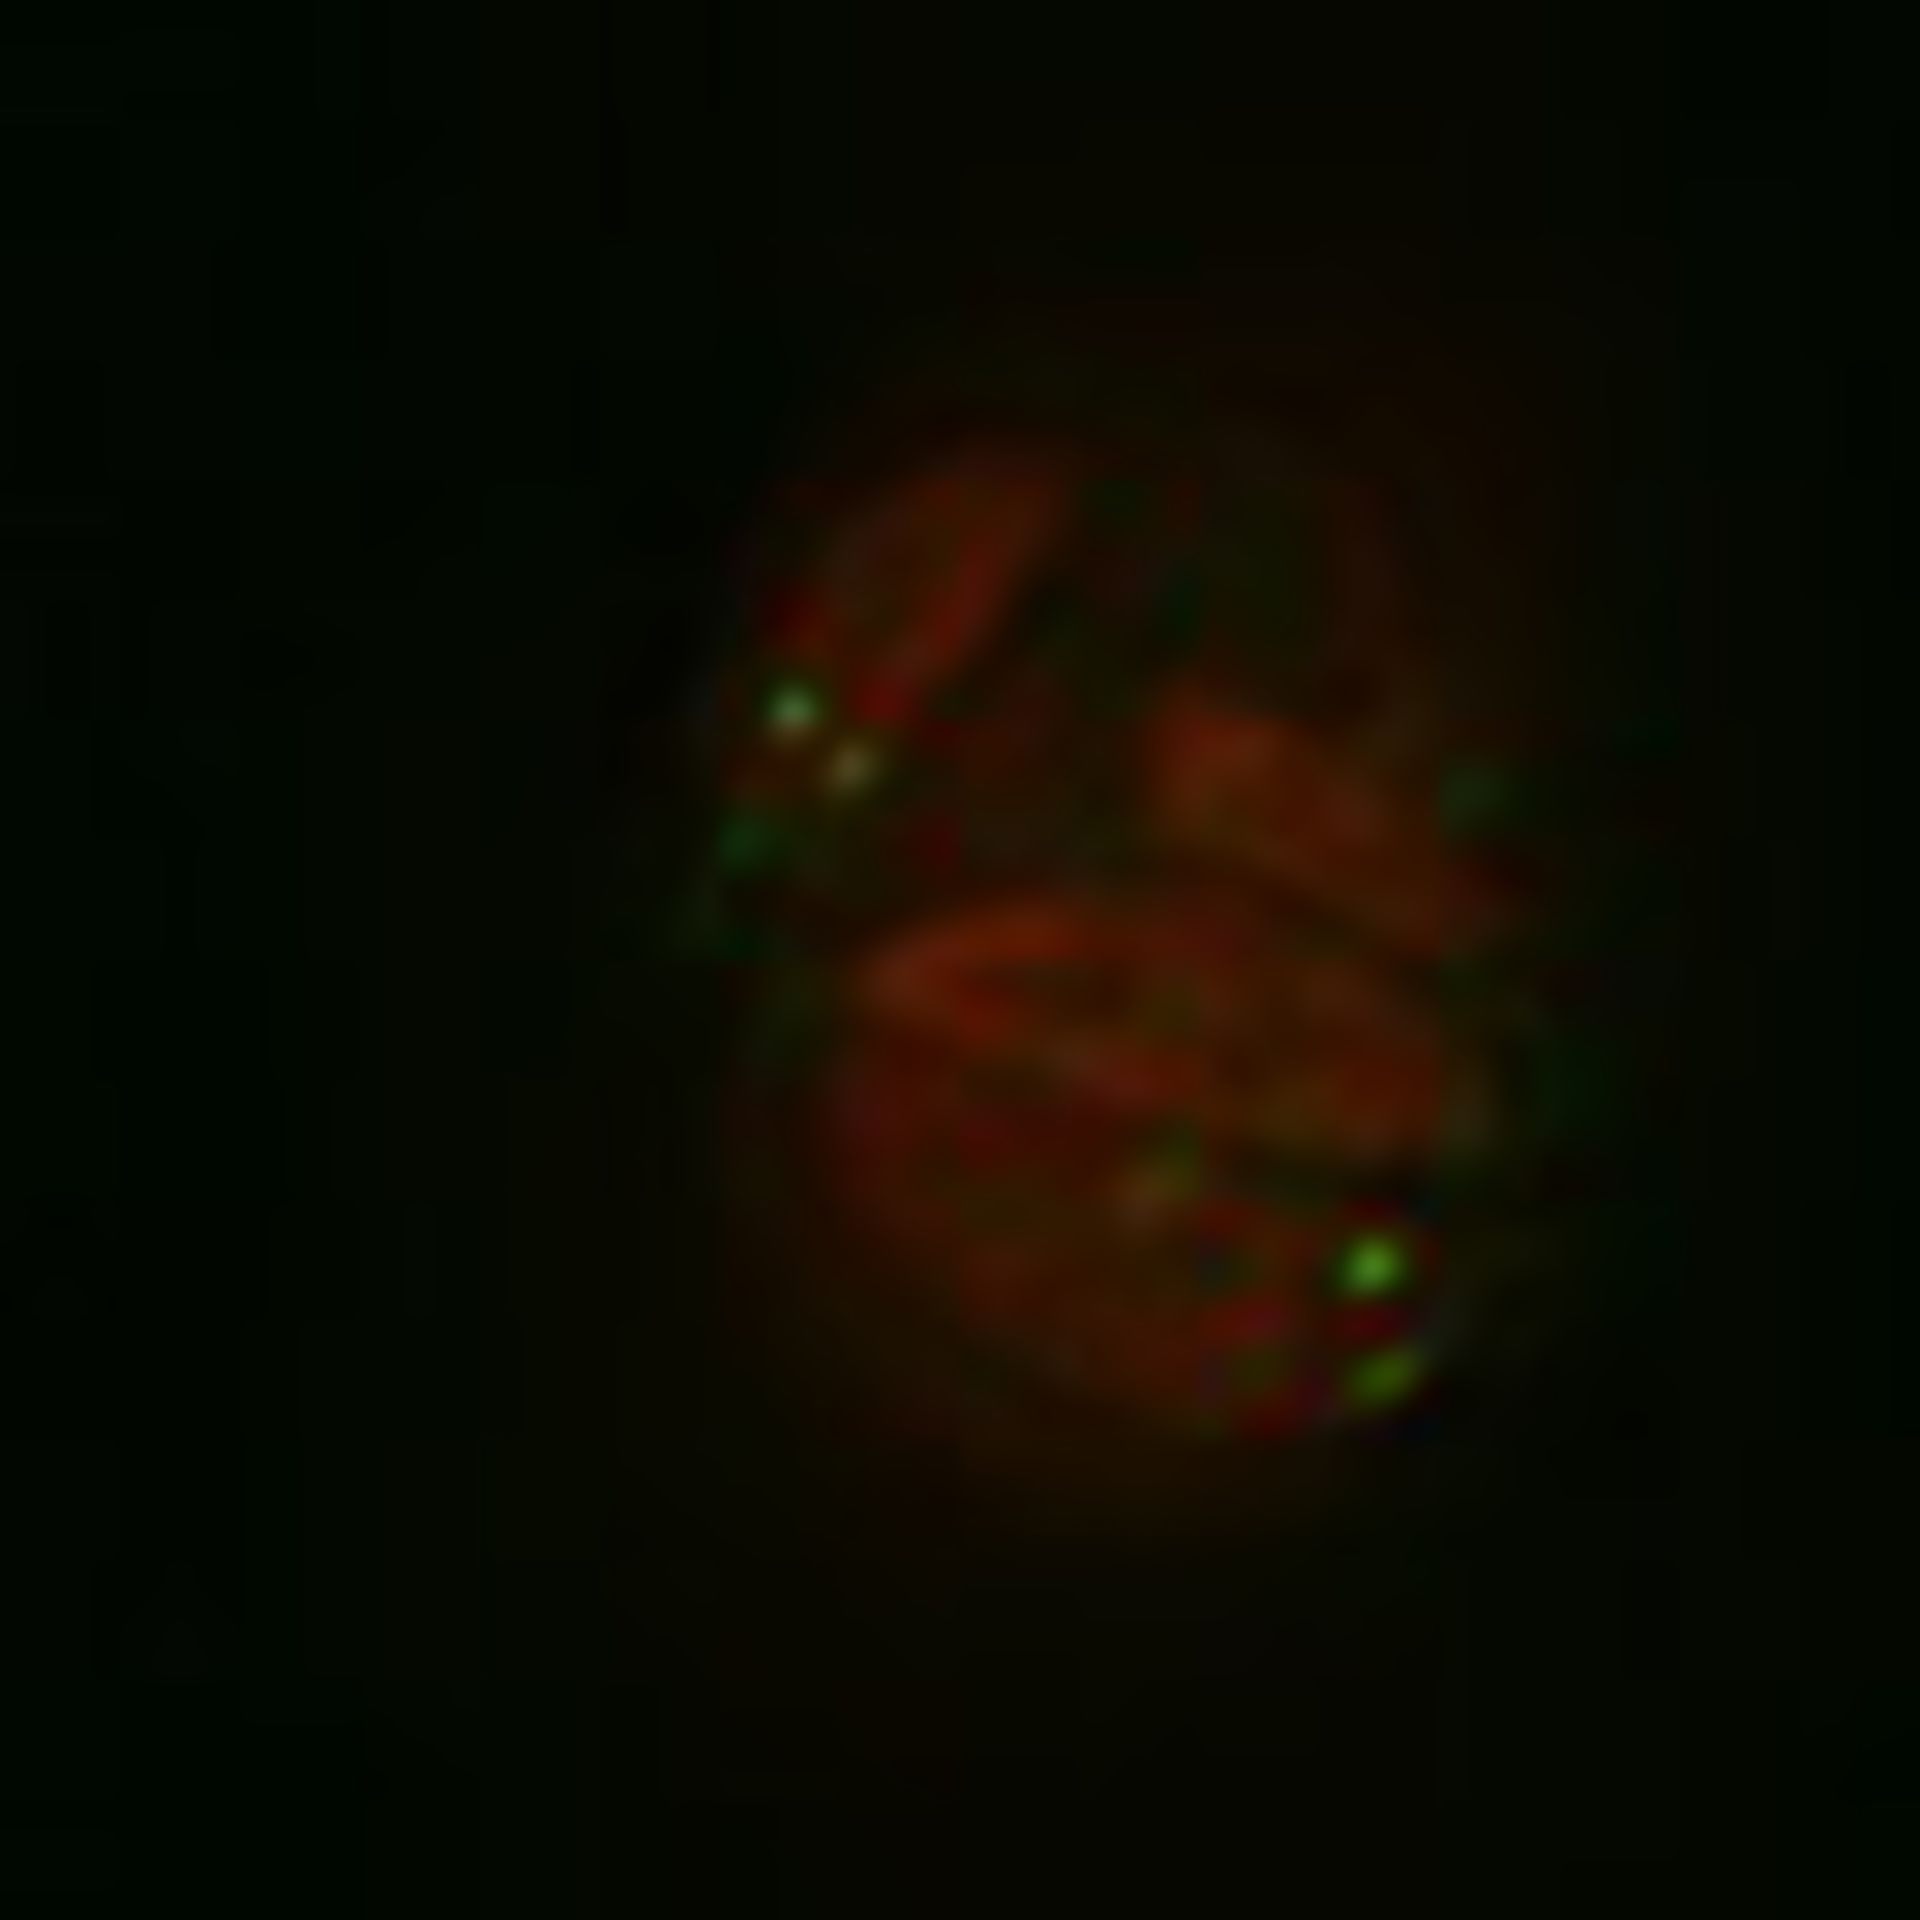 Toxoplasma gondii RH (Polar ring of apical complex) - CIL:10503